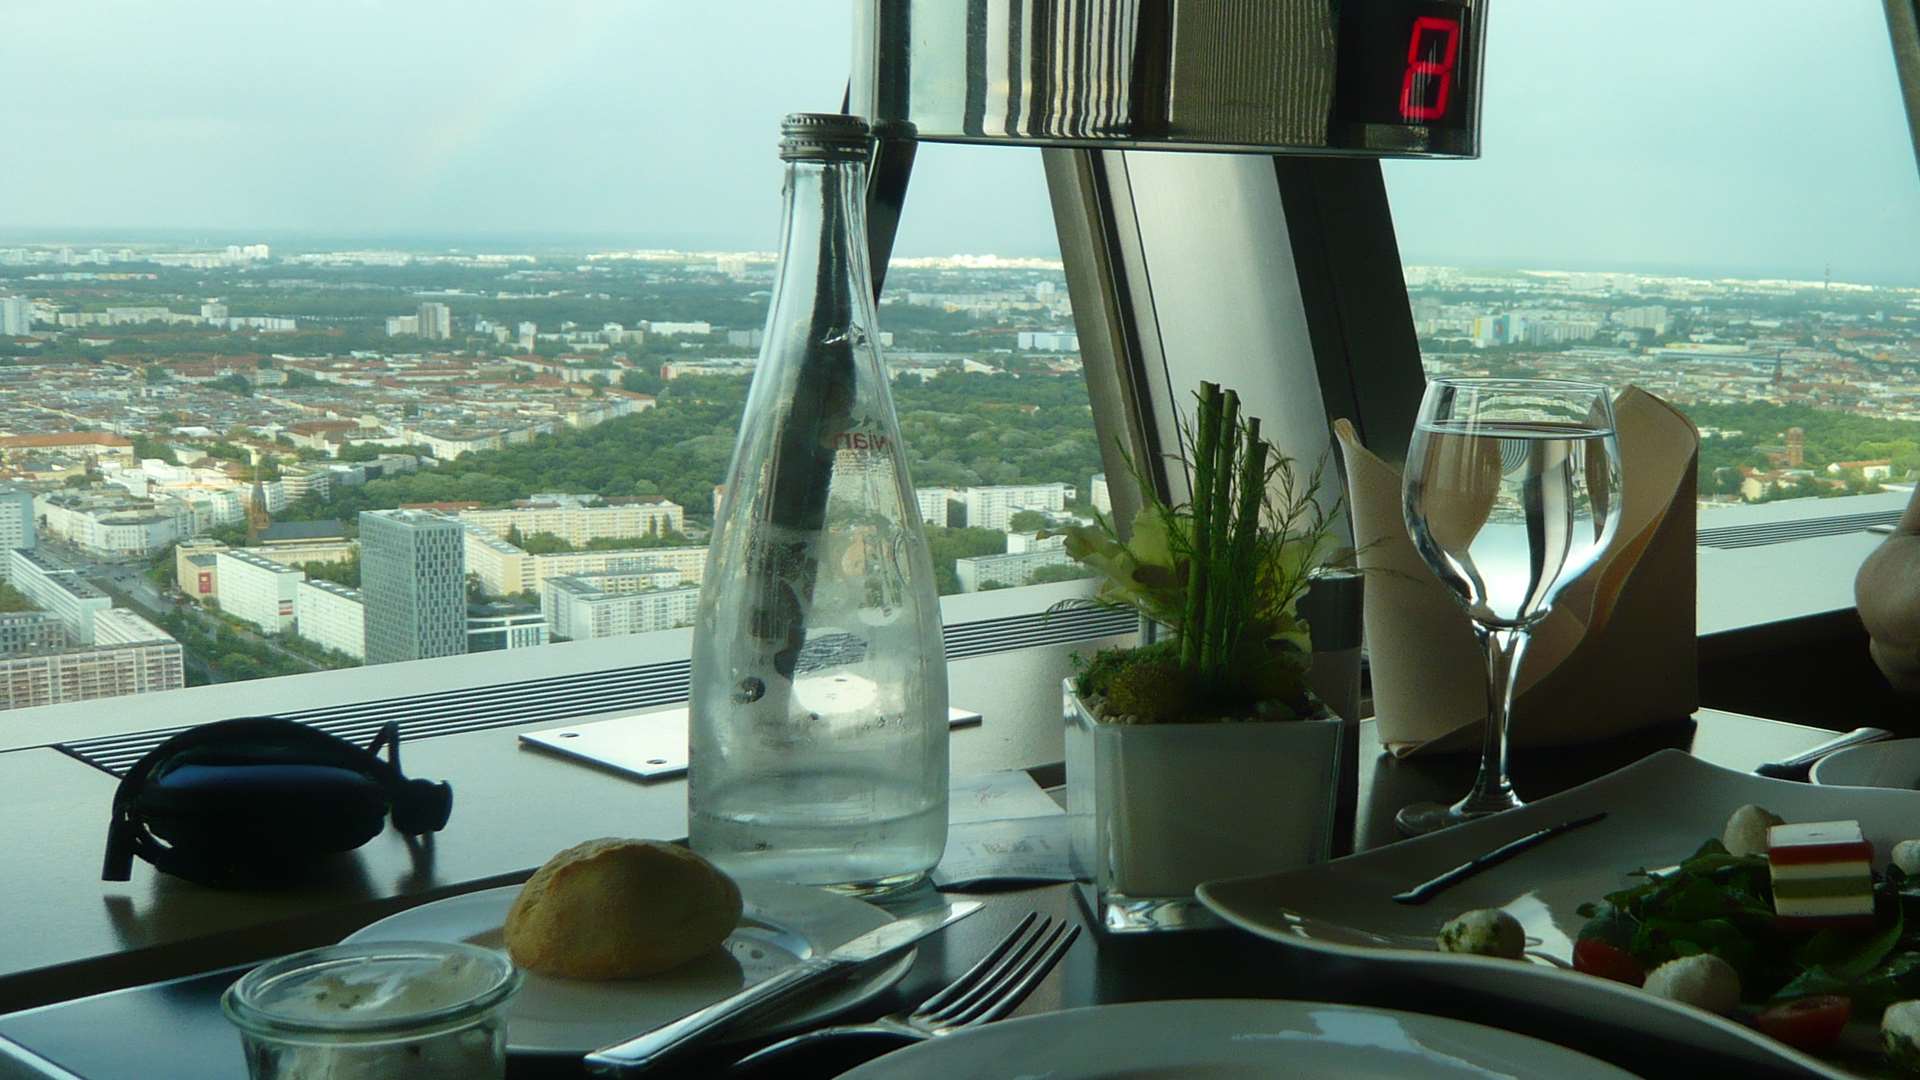 Enjoying food more than 200 metres high at the TV Tower restaurant